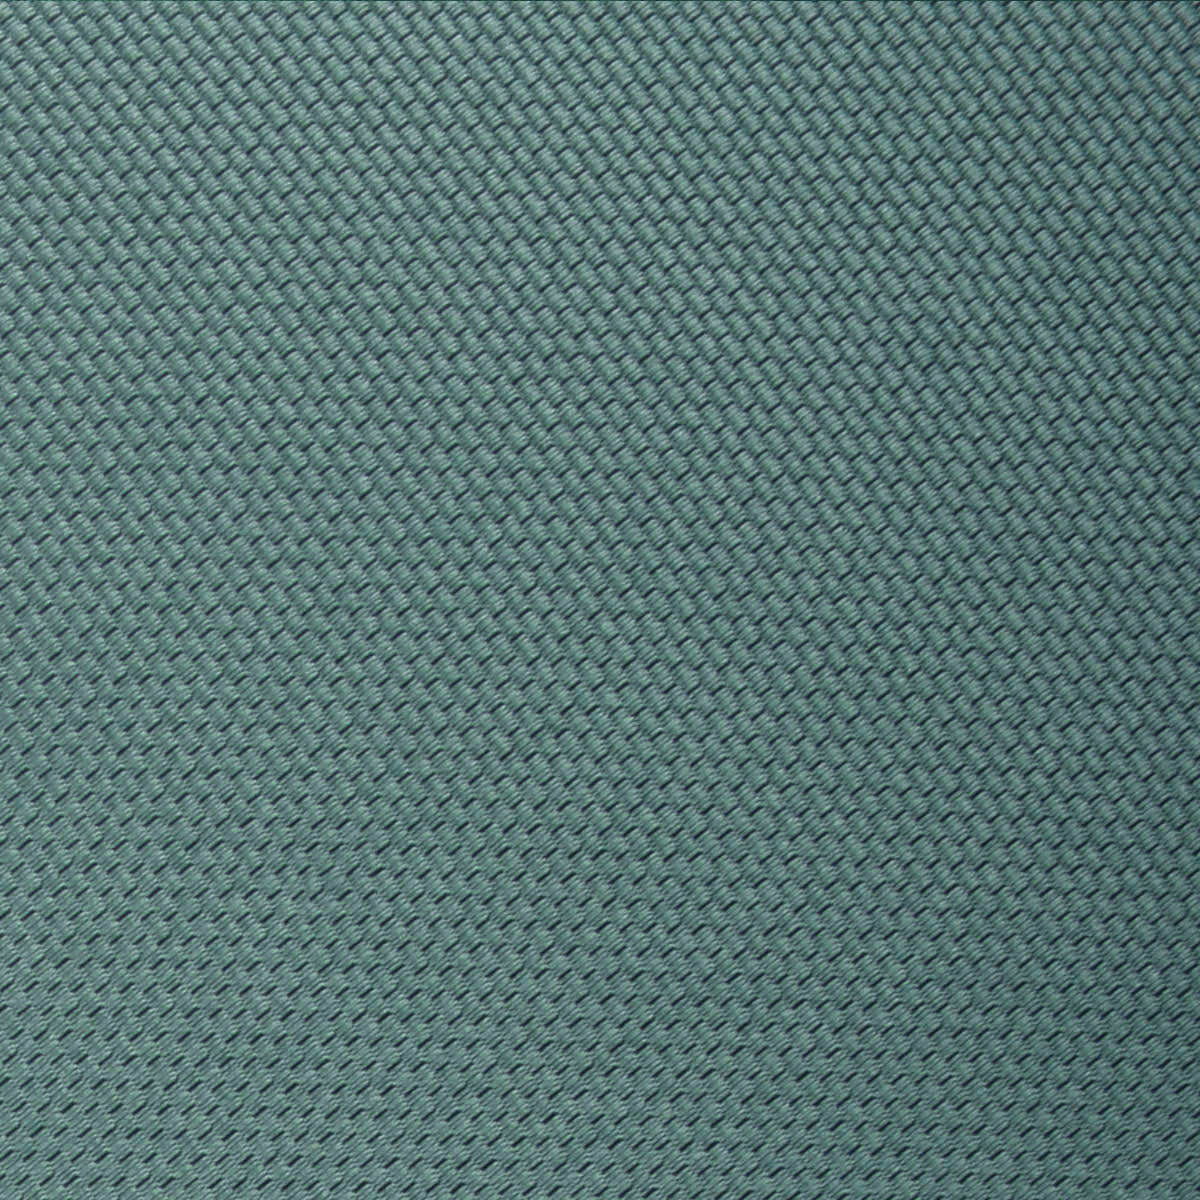 Dusty Teal Blue Weave Skinny Tie Fabric